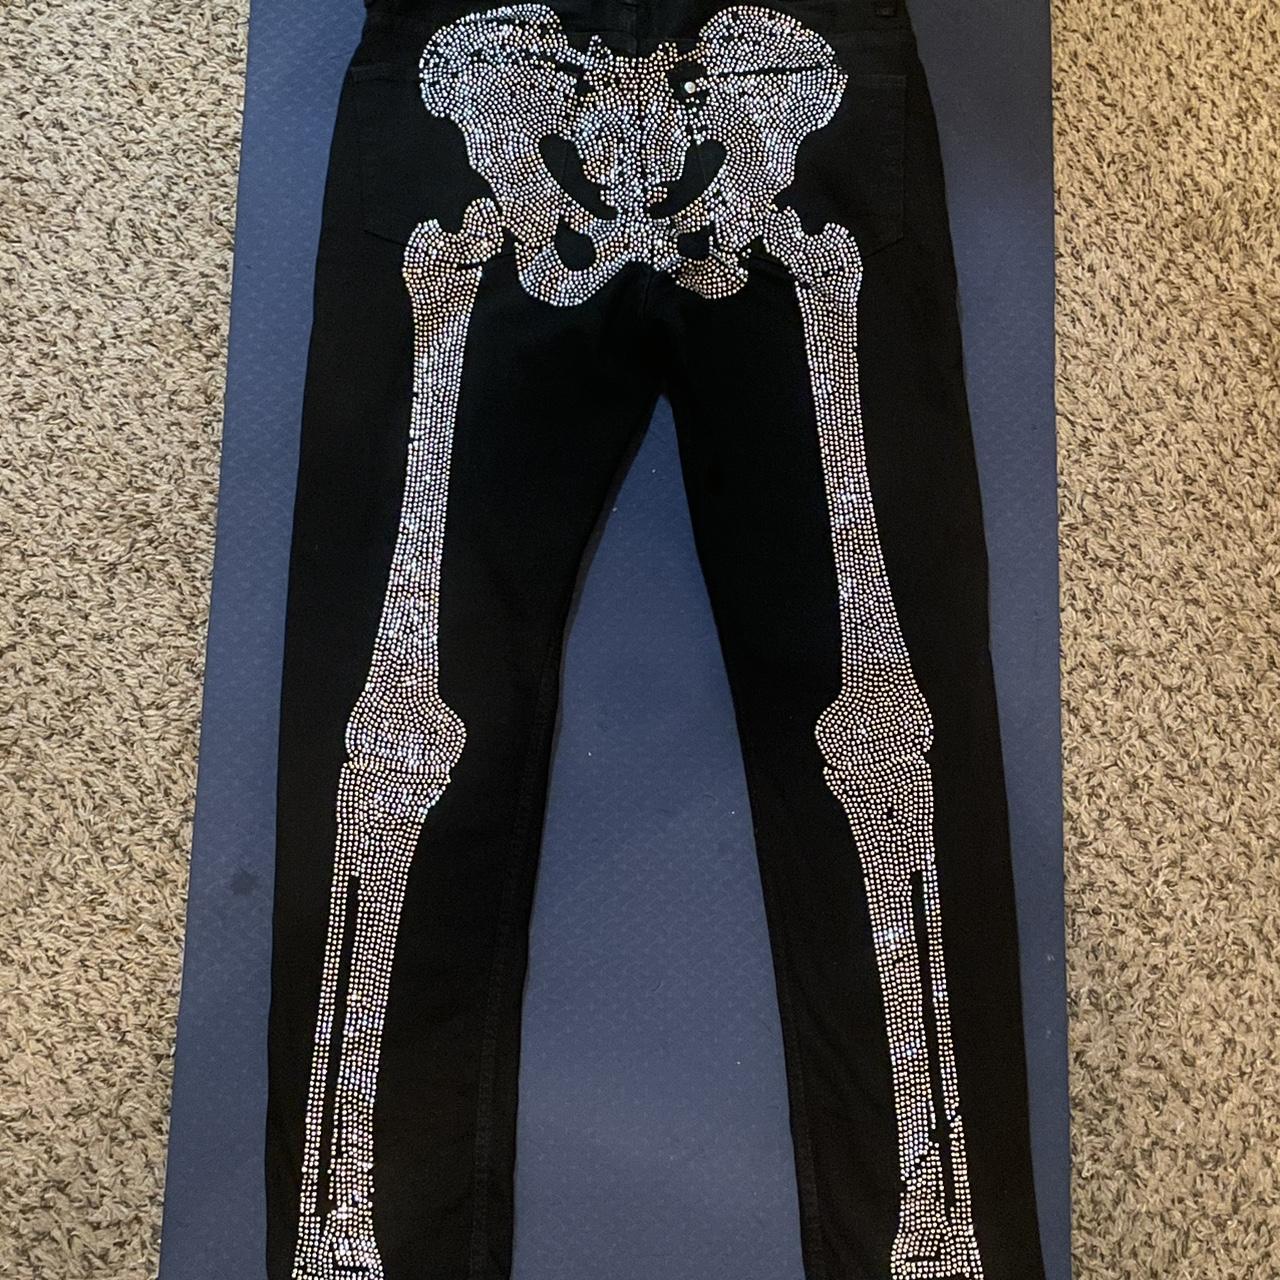 Skeleton Rhinestone Jeans Waist: 29 Rhinestone Jeans Rhinestone